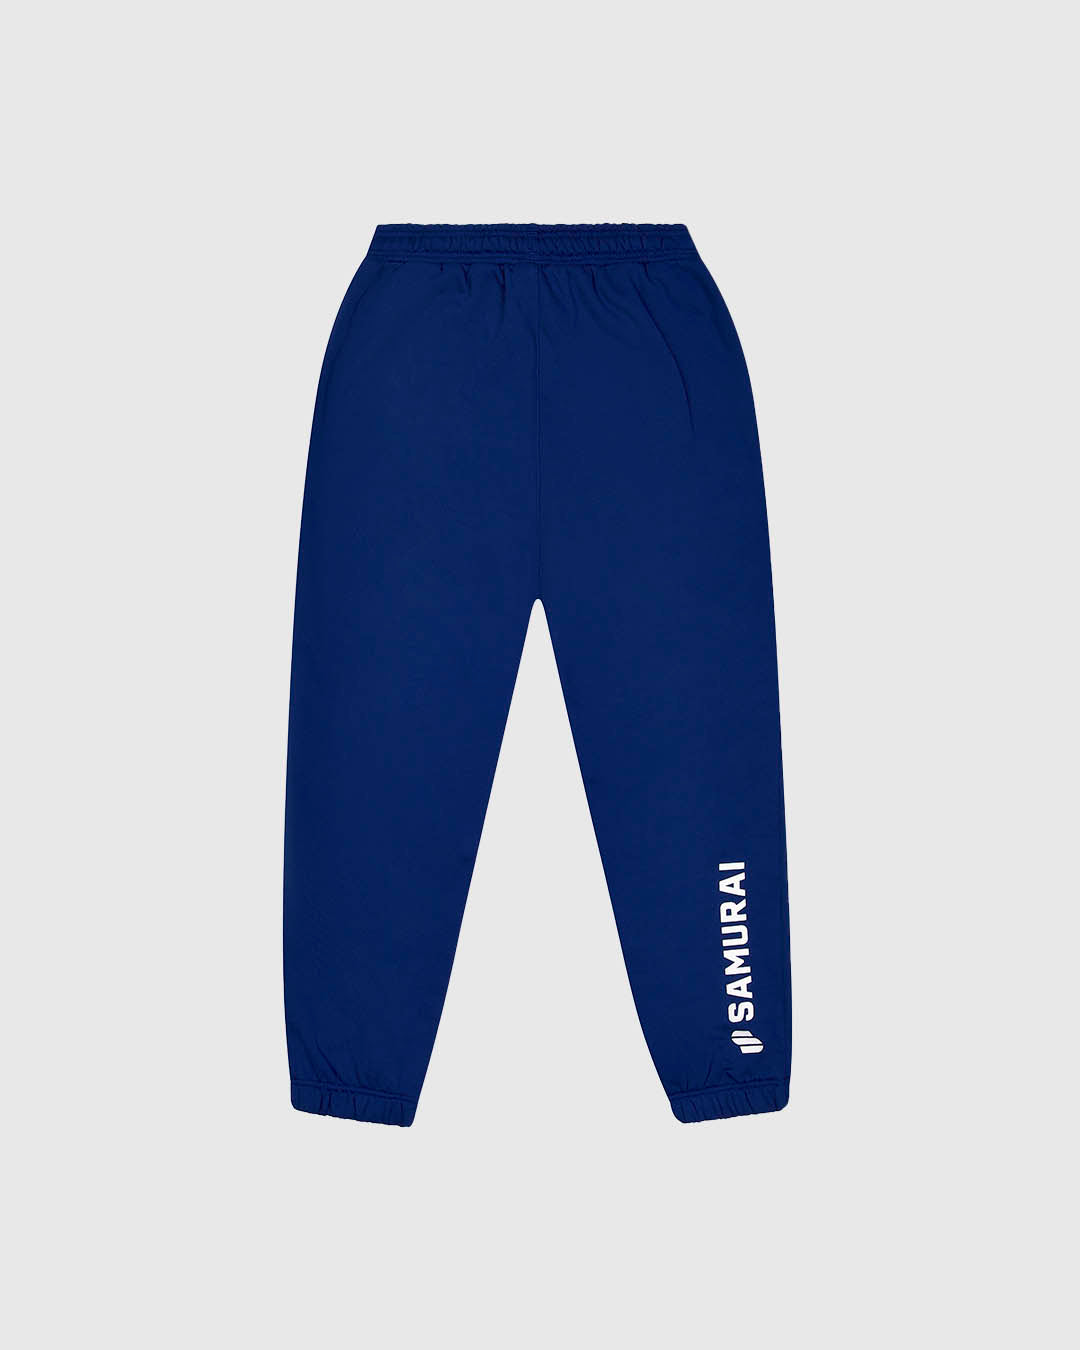 PFC: 003-3 - Men's Sweatpants - Royal Blue